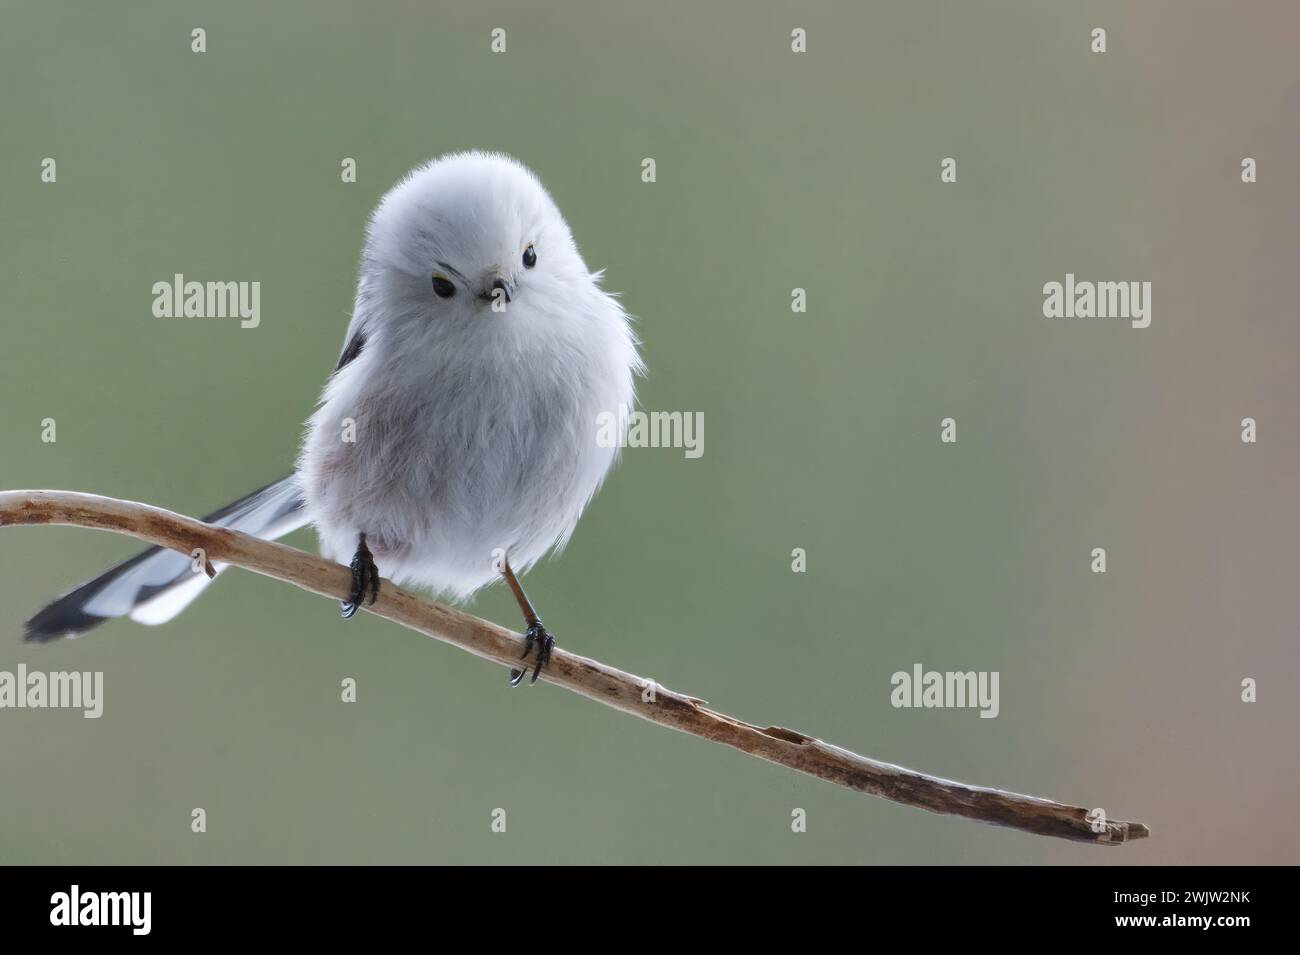 Piccolo birdwatching bianco Foto Stock